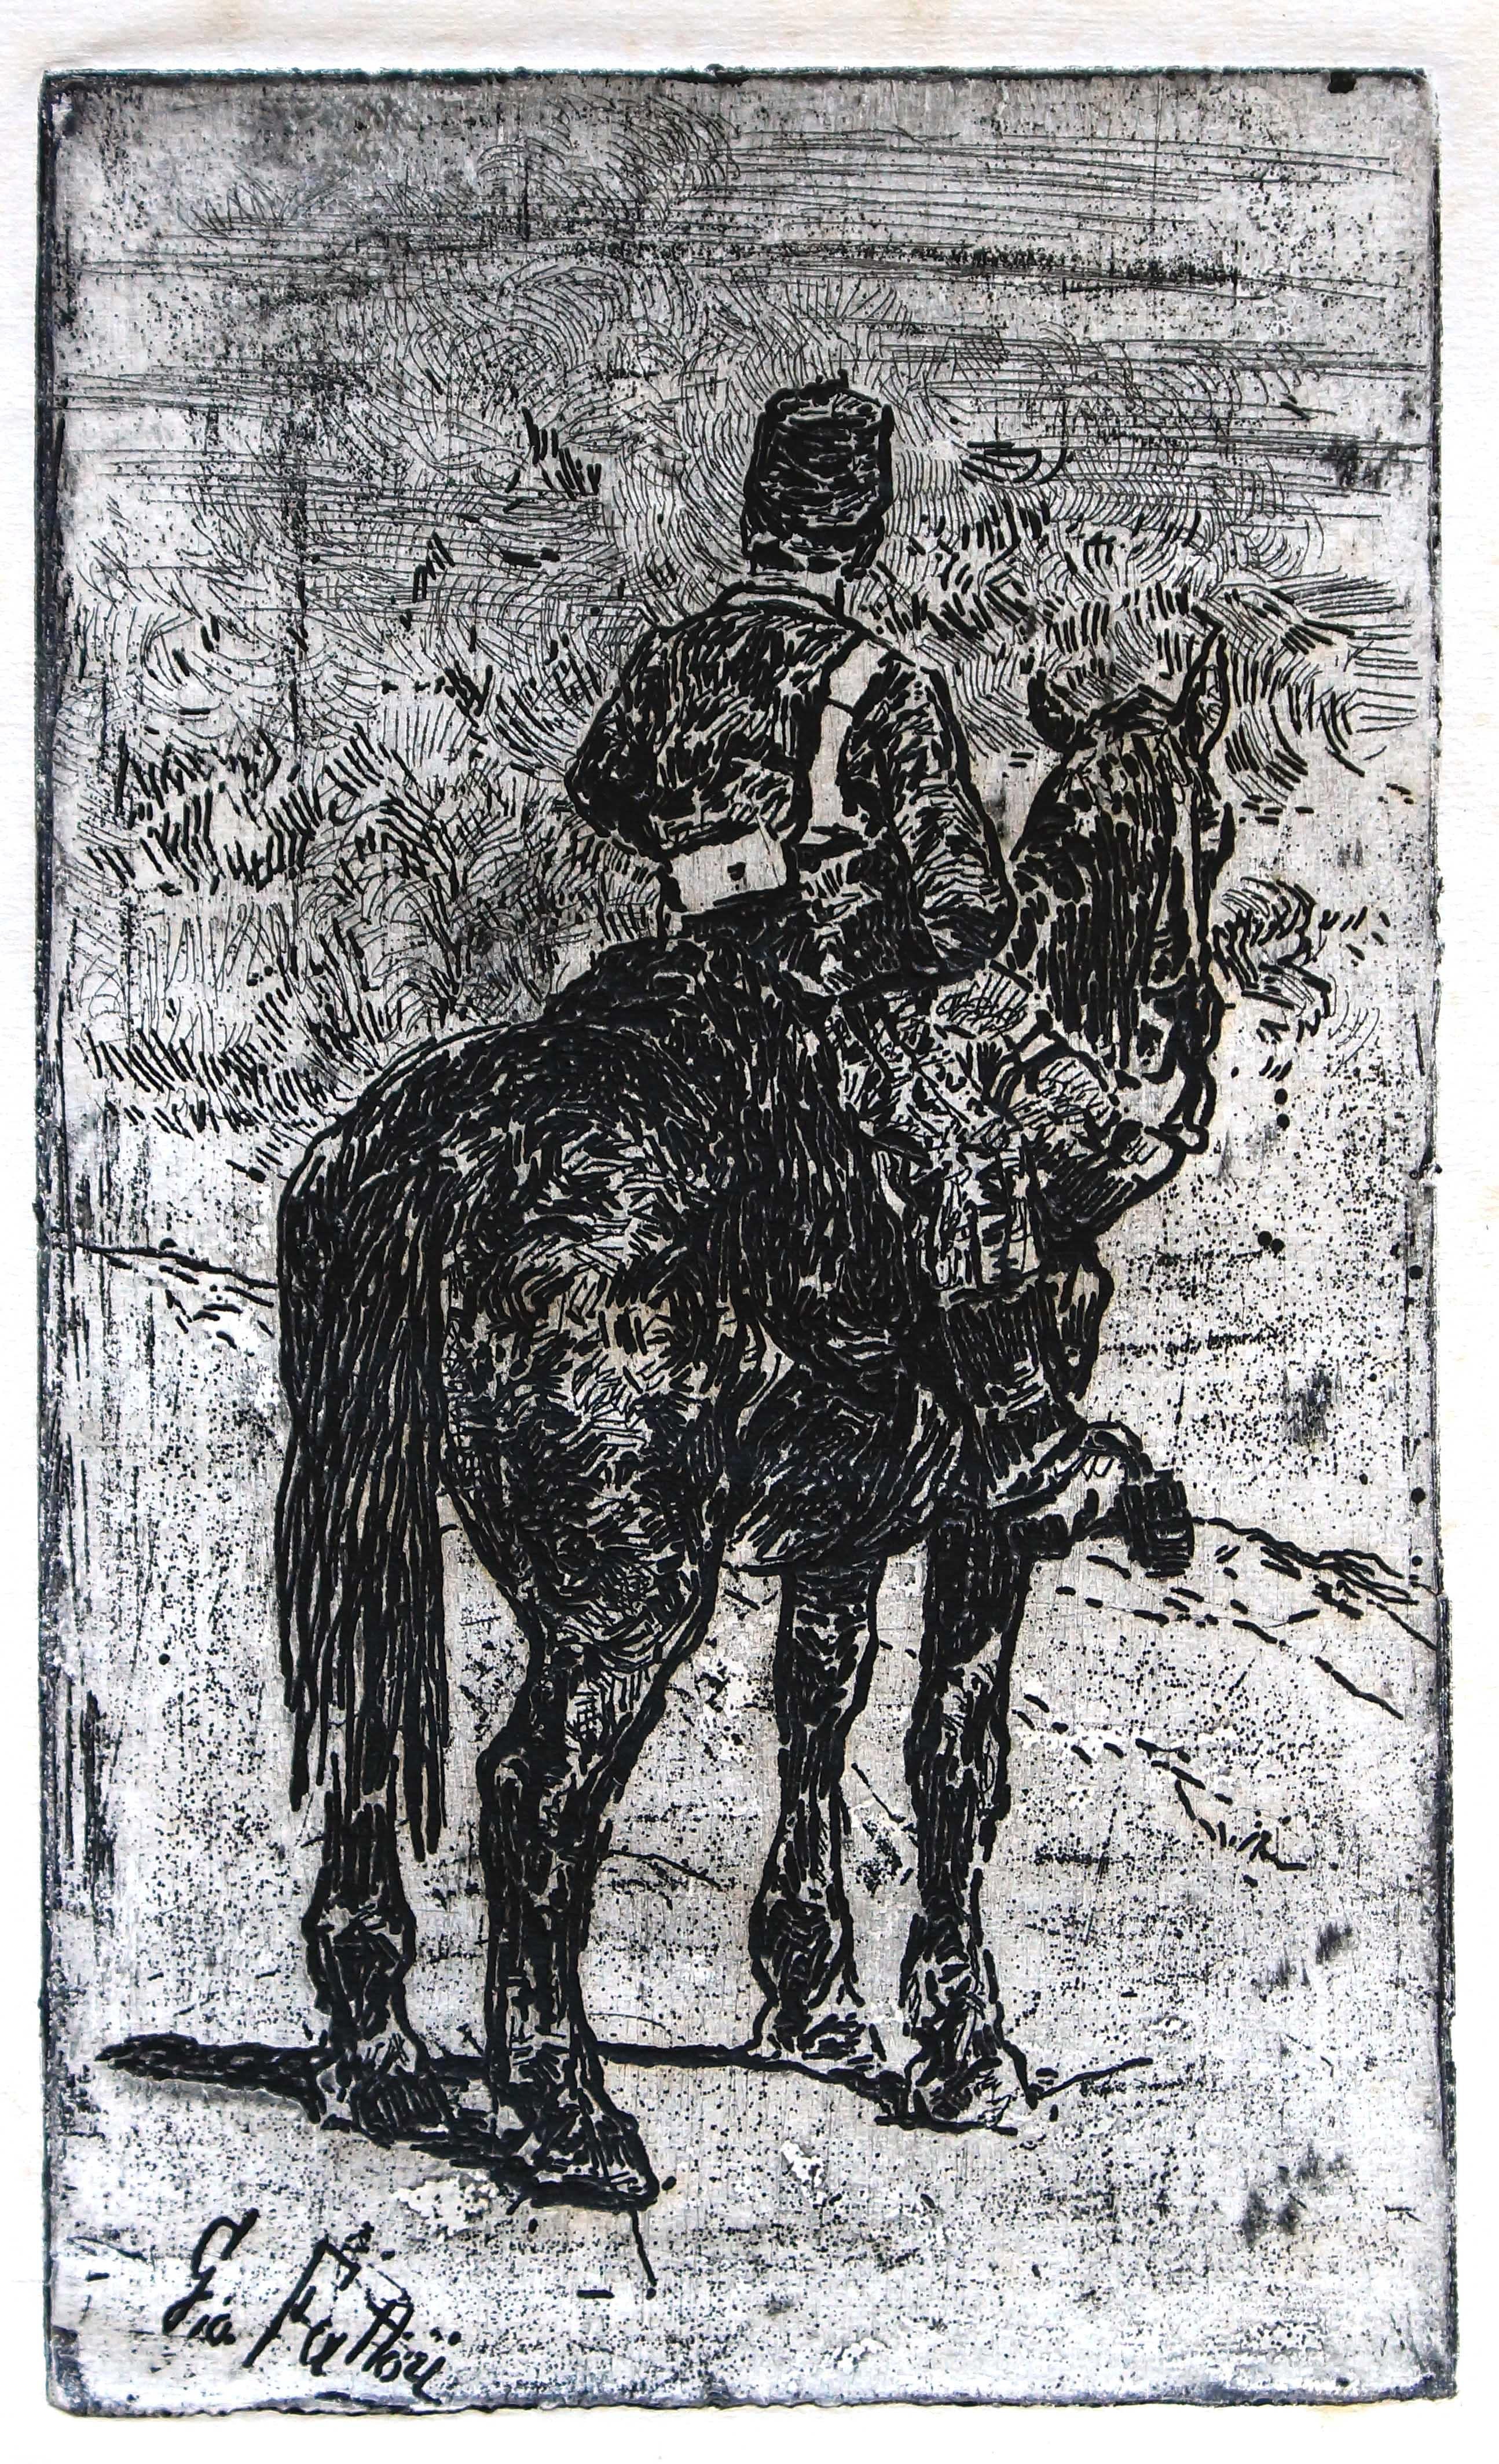 Gunner Riding - Original Etching by Giovanni Fattori - 1900 ca.